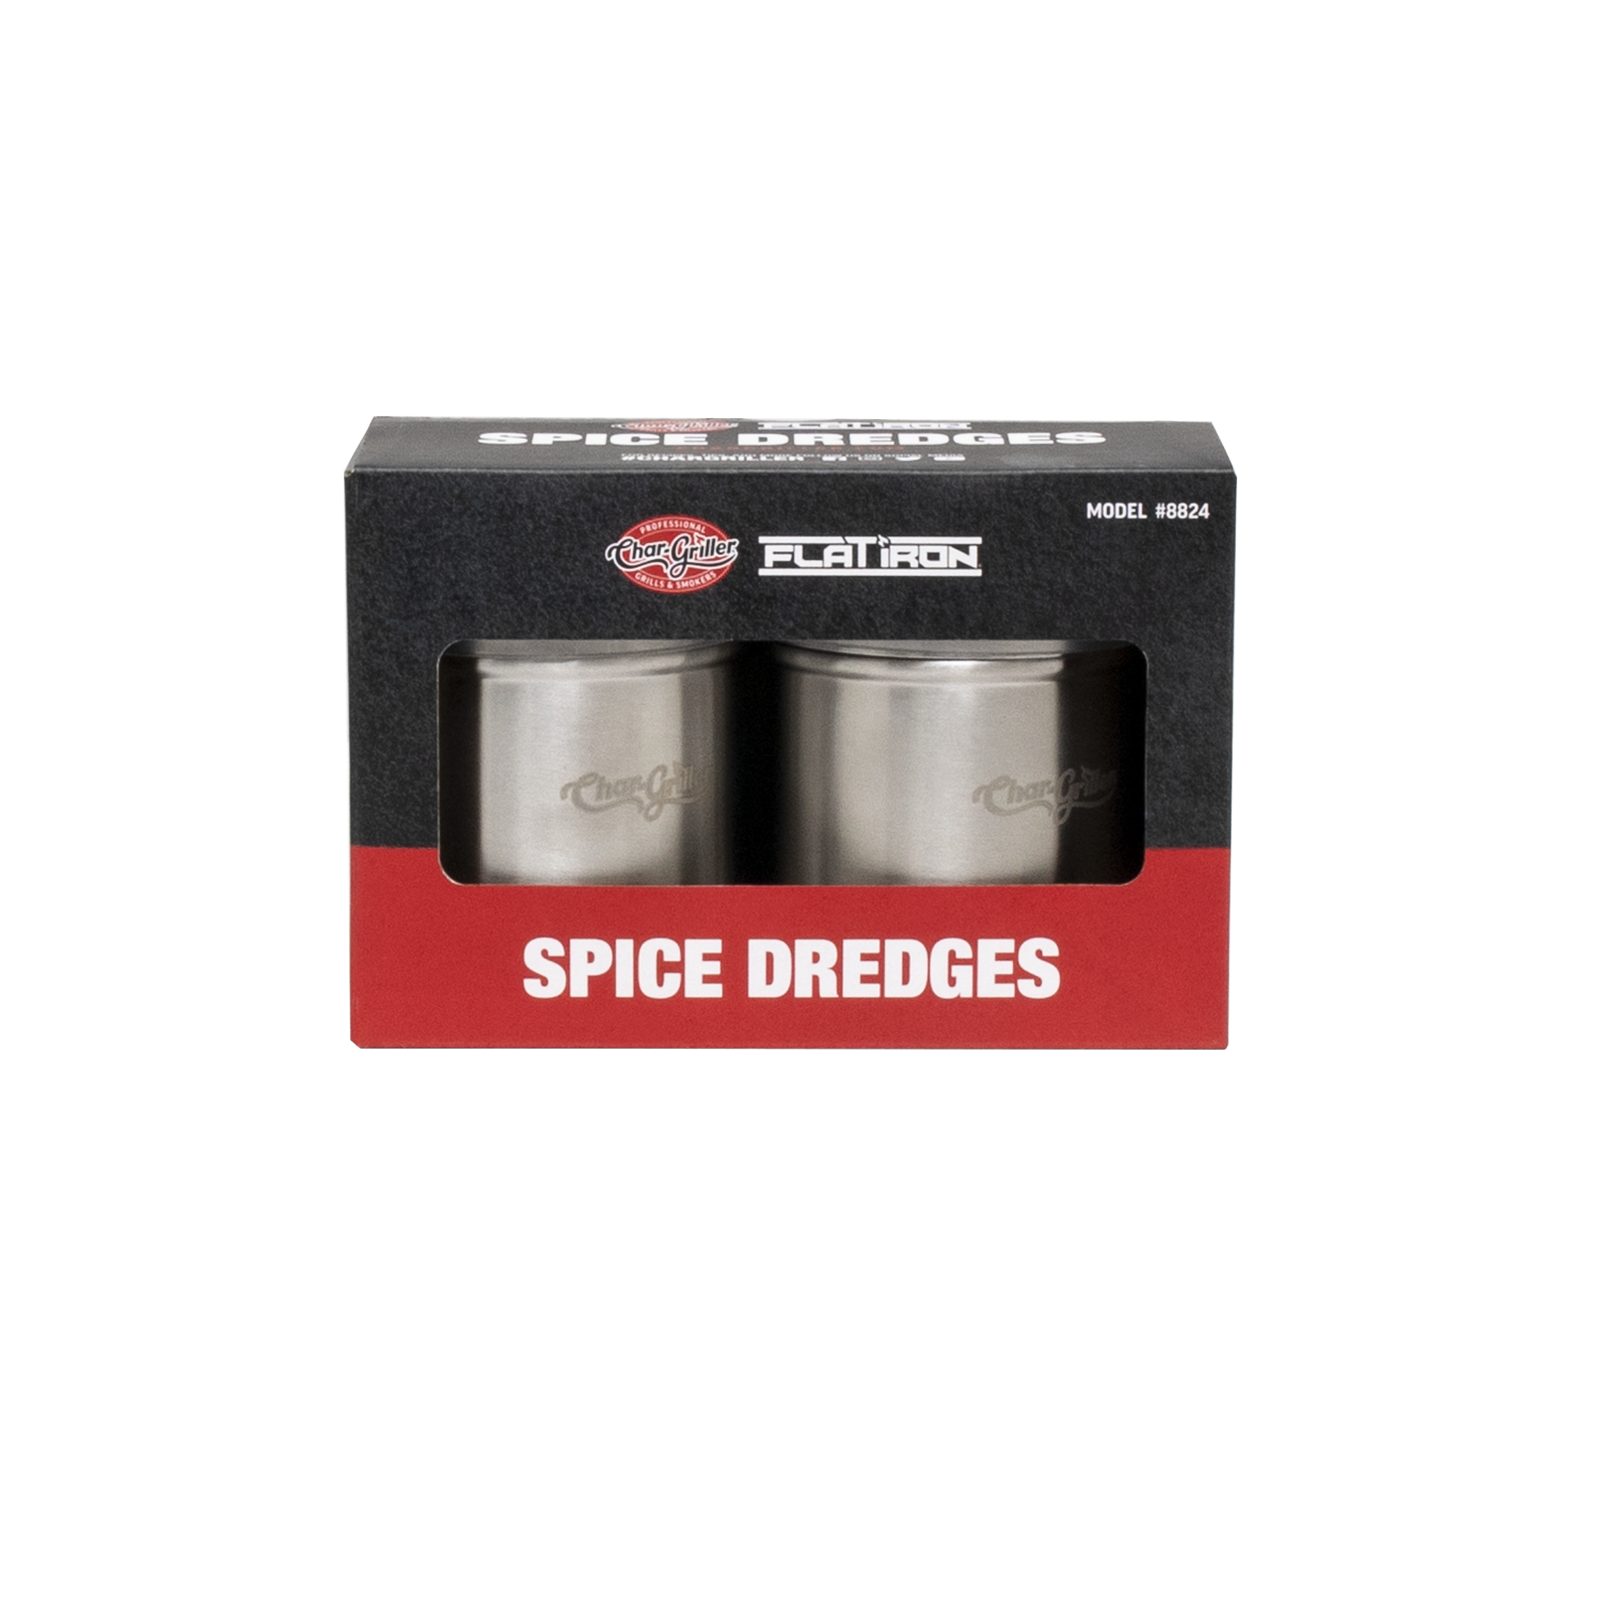 Spice Dredge - 2 pack